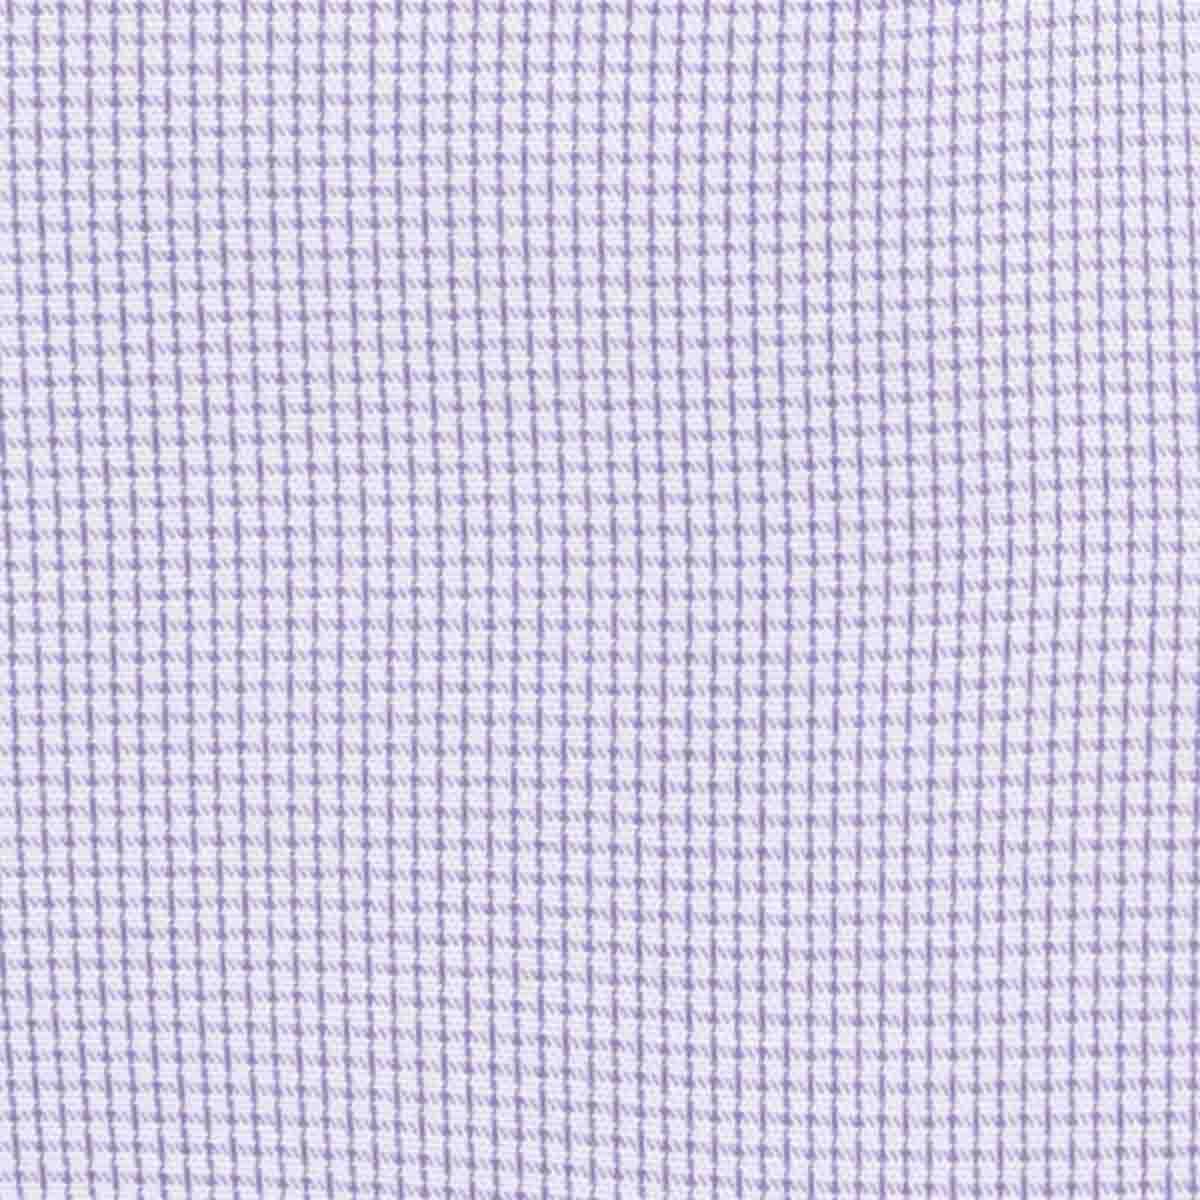 Camisa de Vestir Color Morado Claro Nina Ricci para Caballero